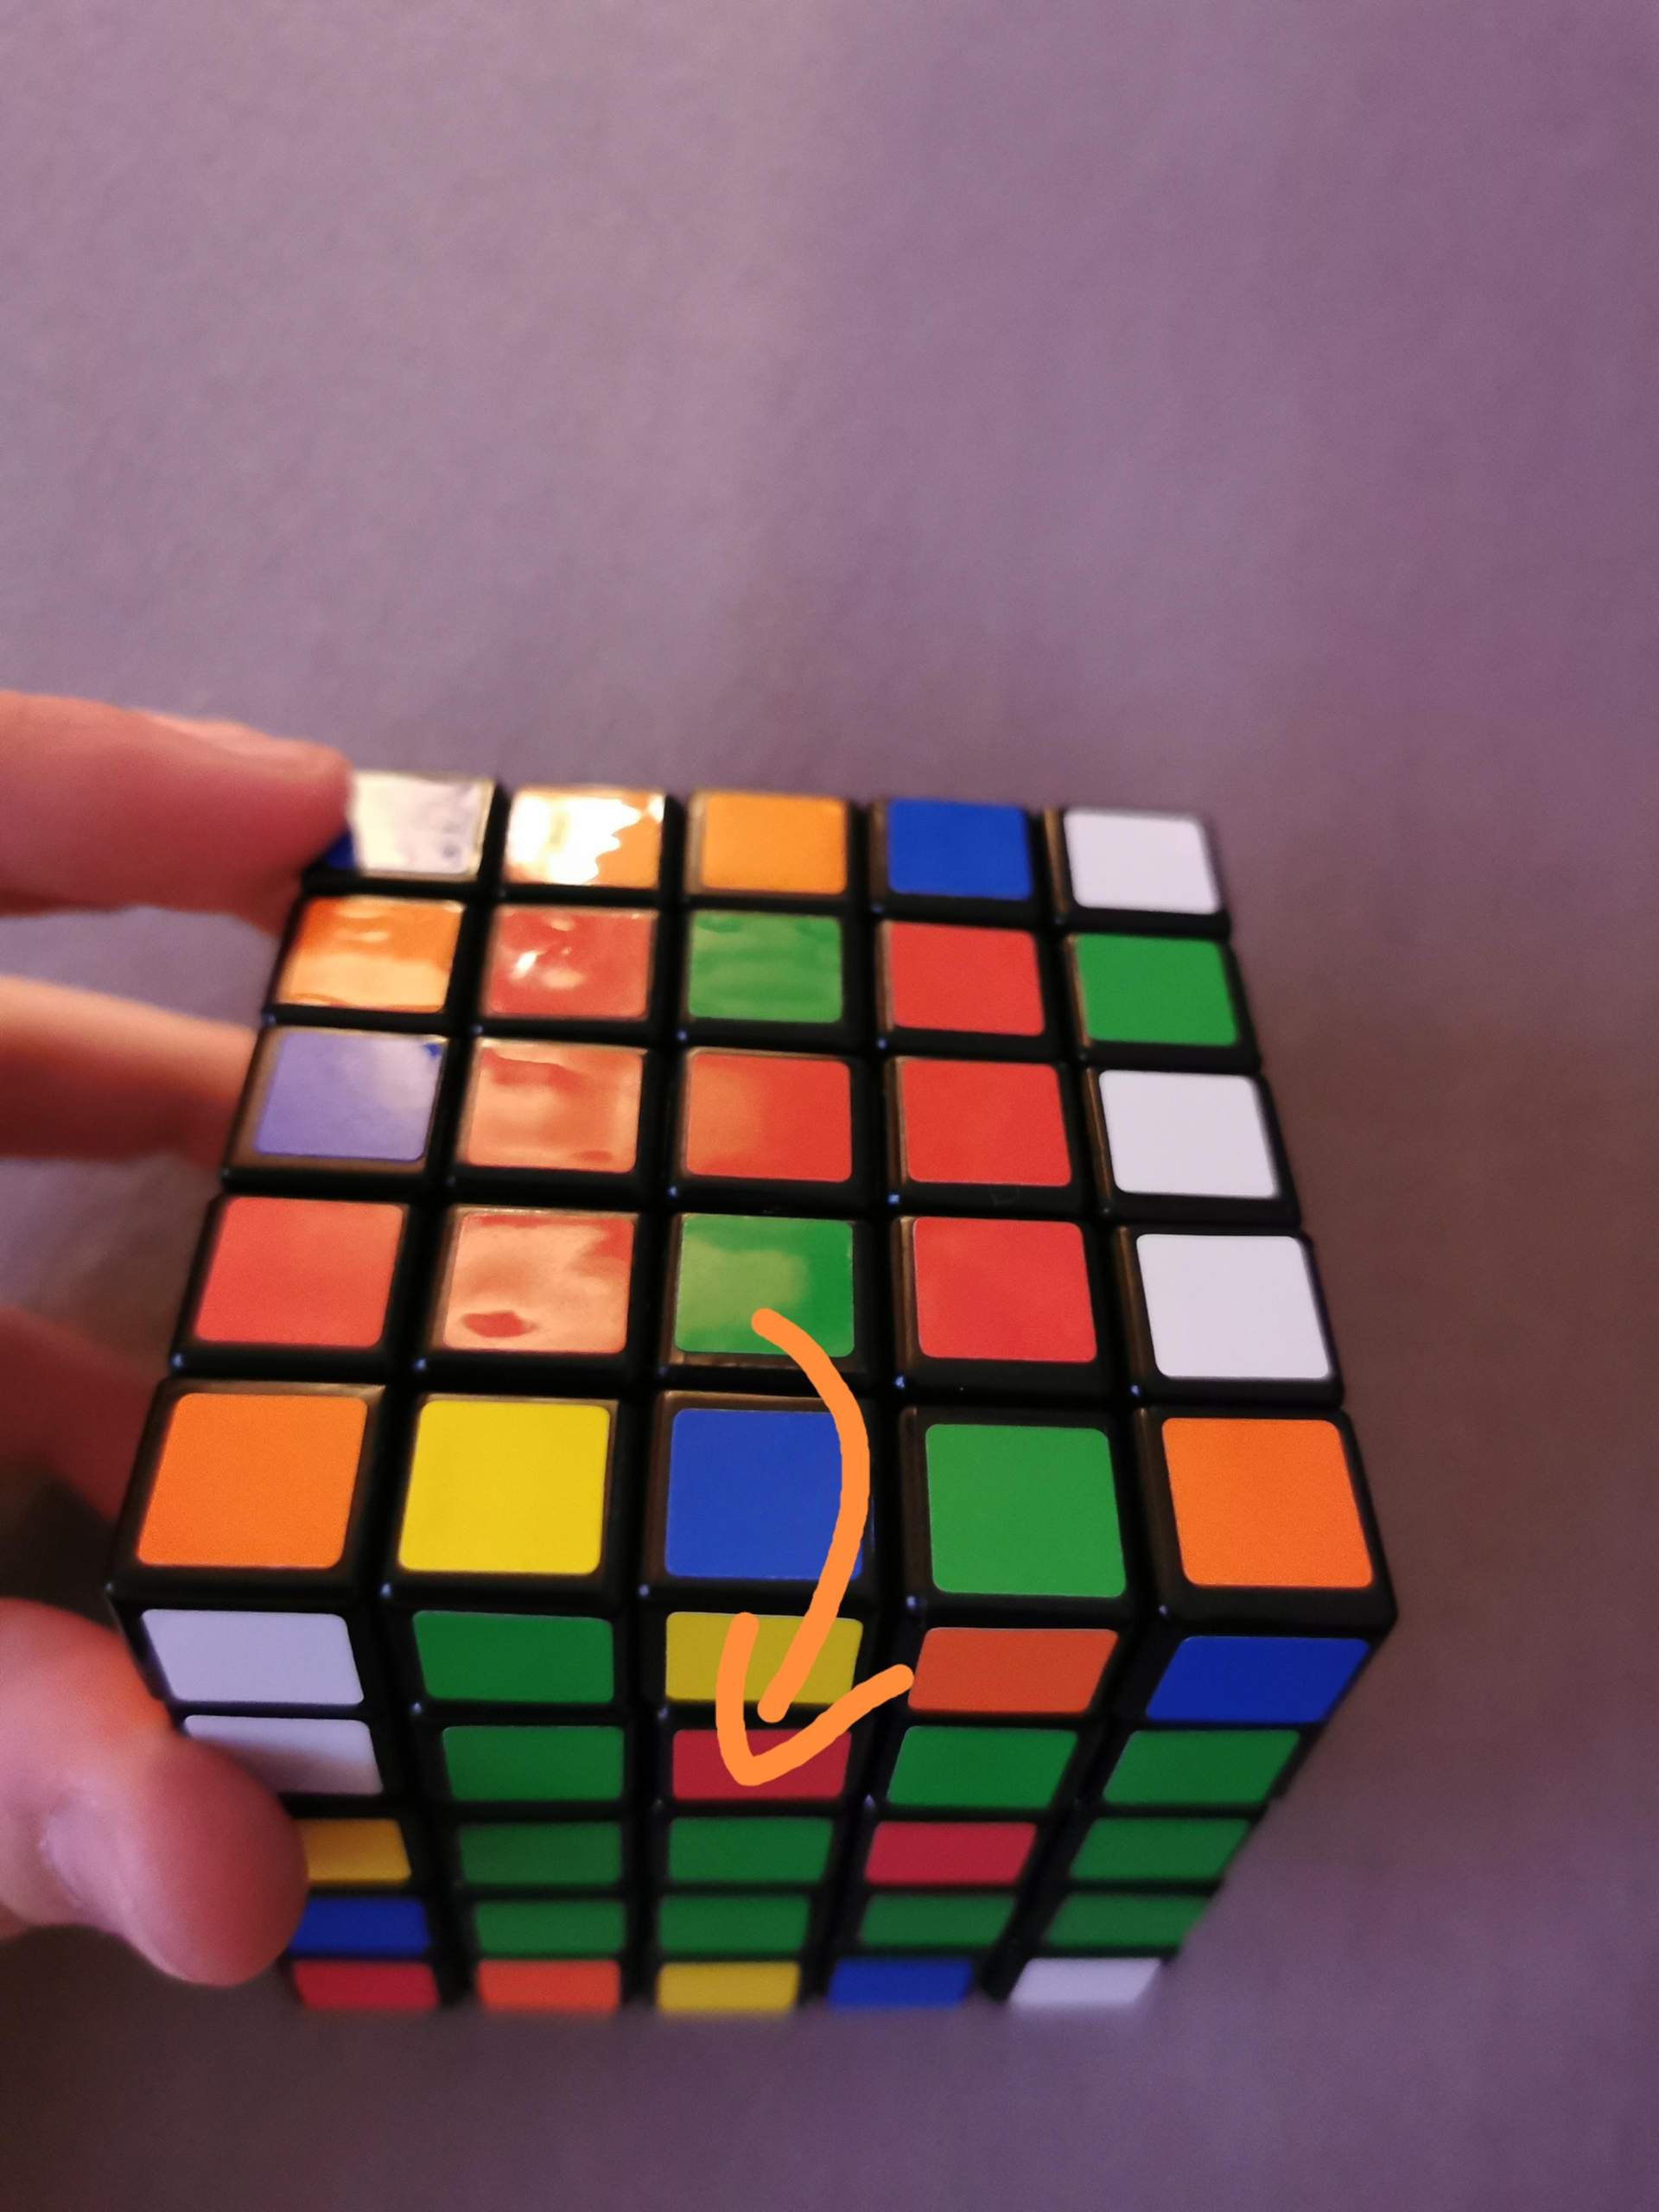 algorithmus-rubix-cube-5x5-computer-zauberw-rfel-rubik-s-cube